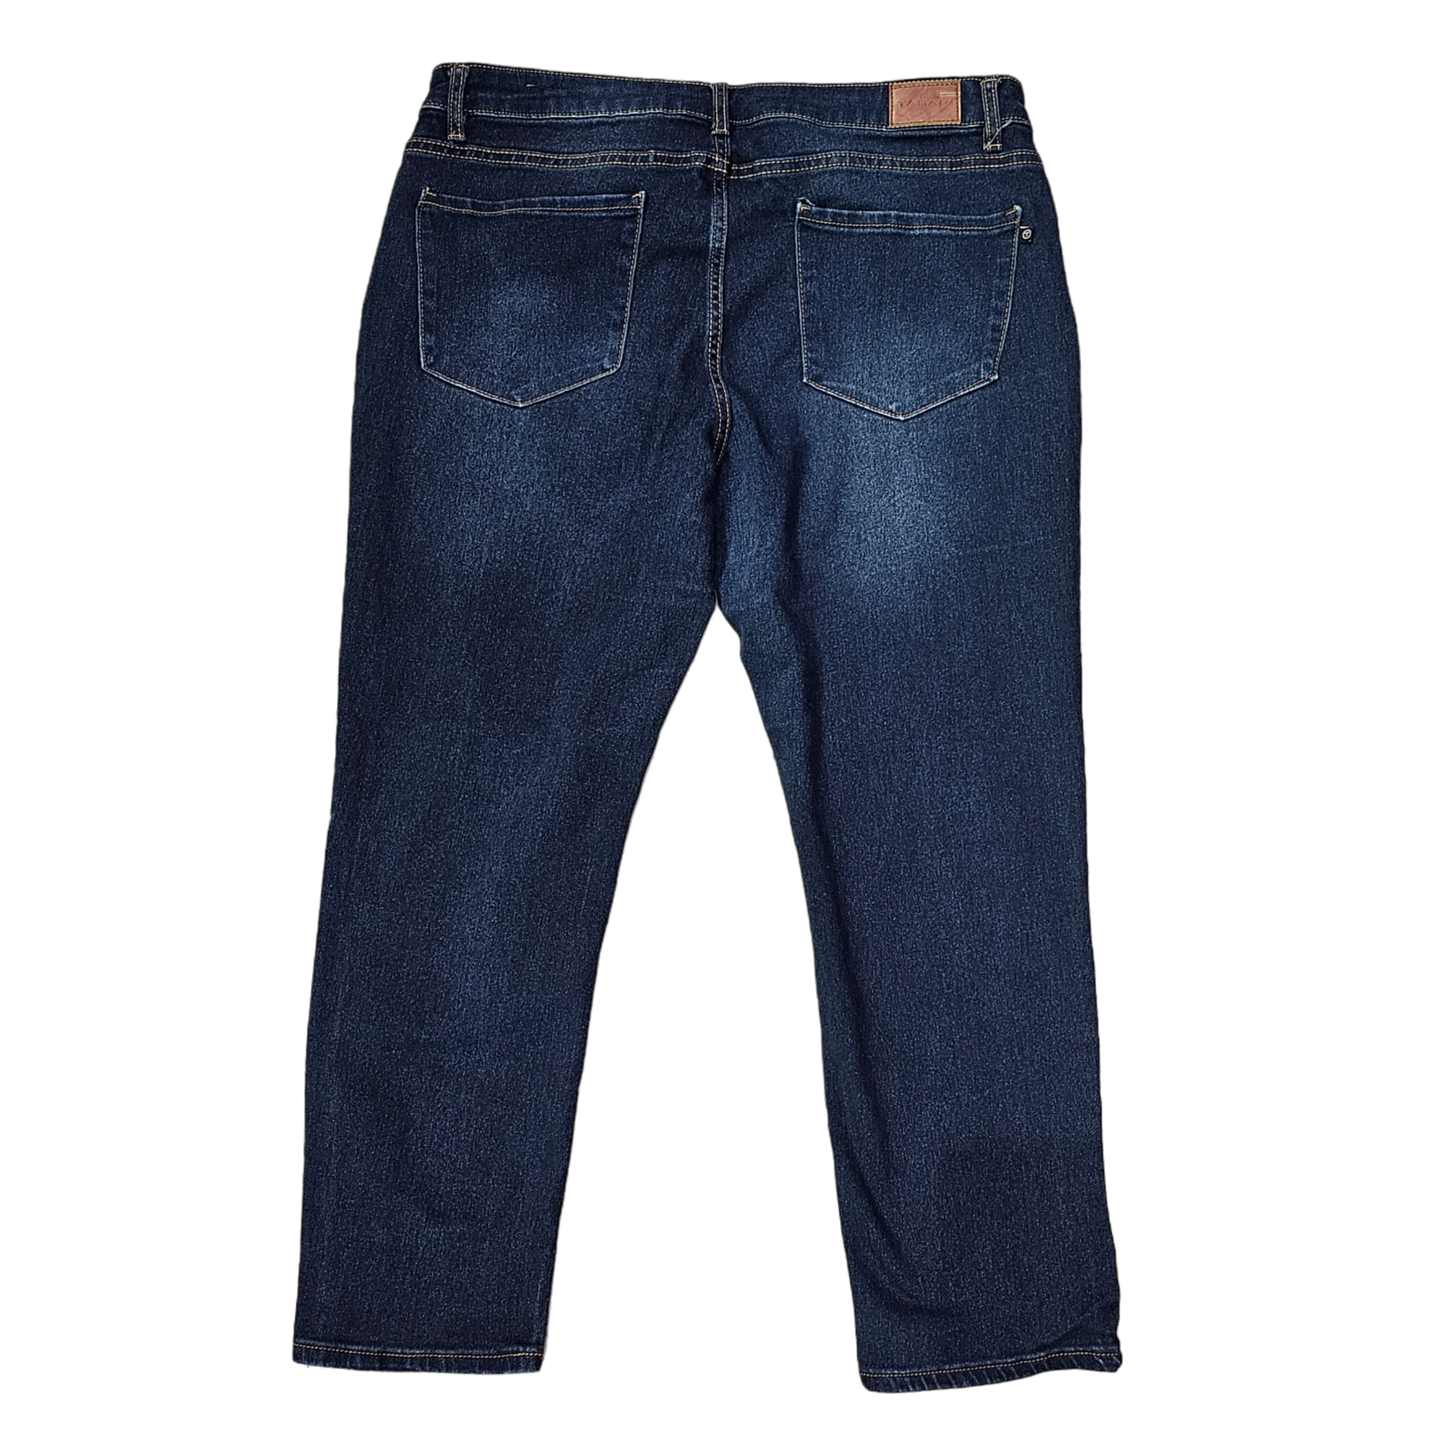 Jeans Designer By Tahari  Size: 16